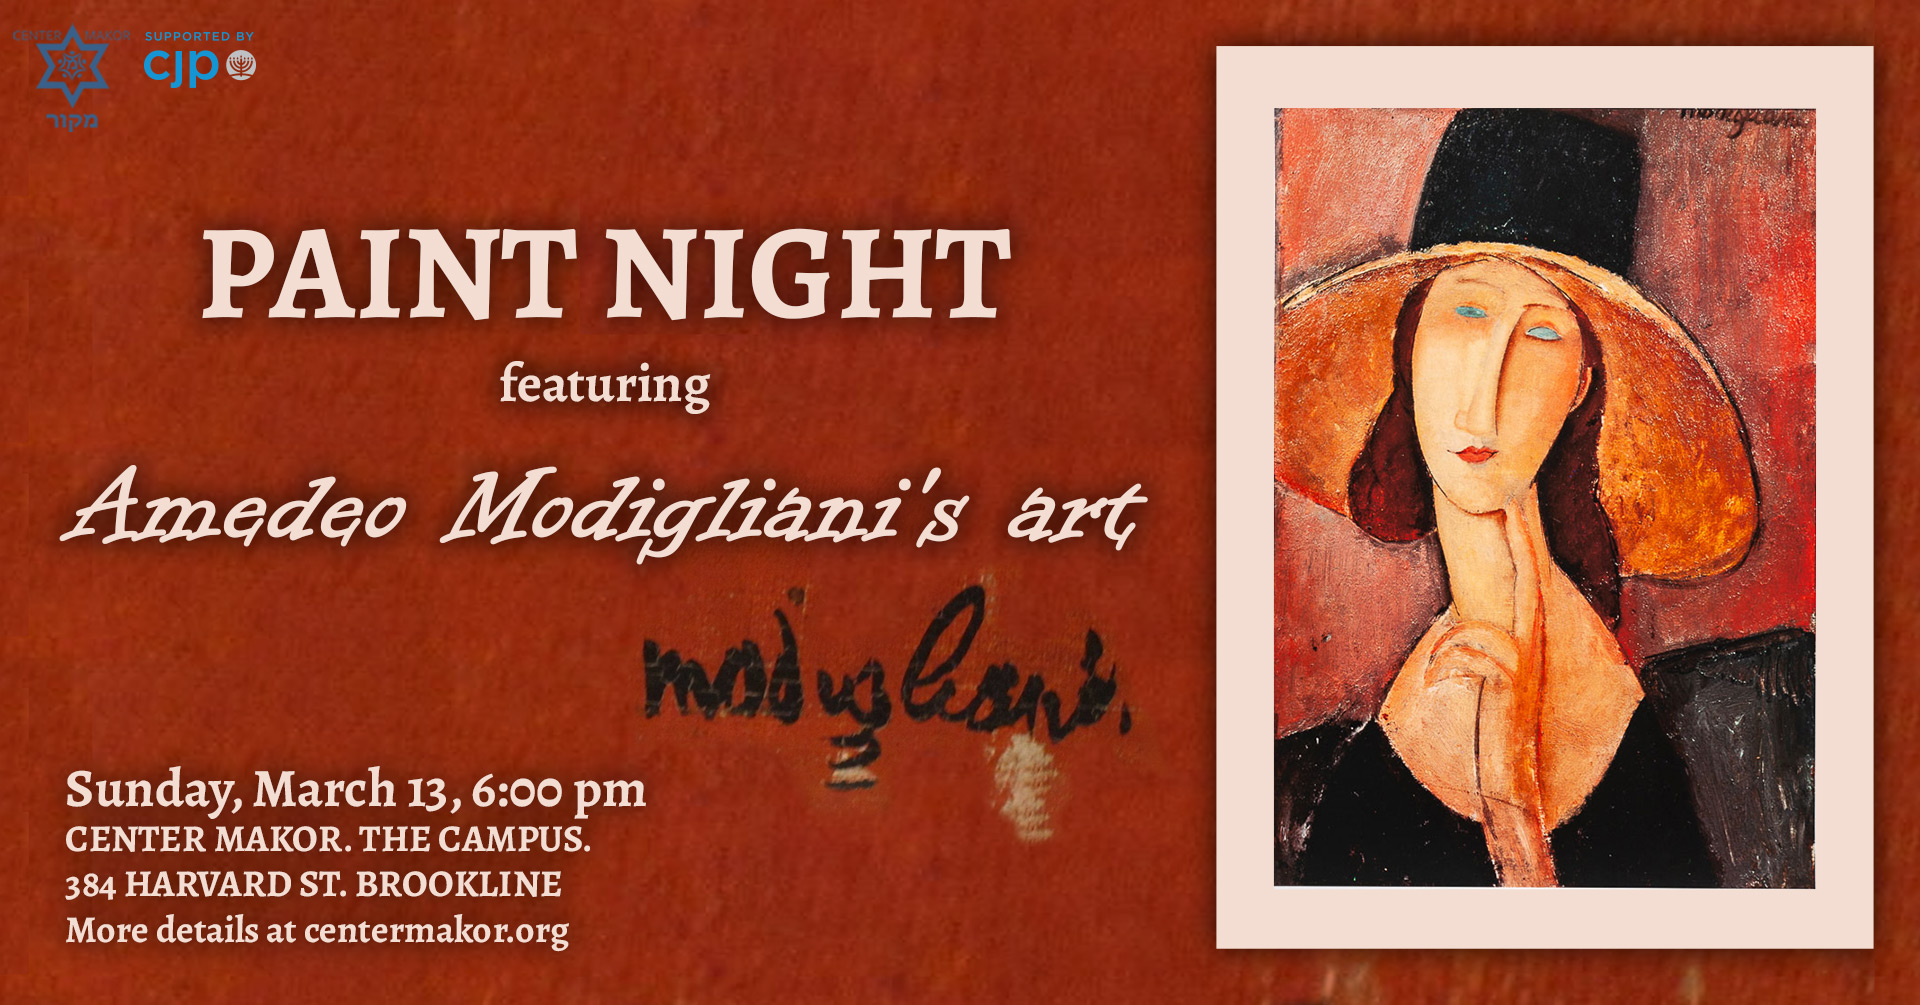 Paint night: featuring Modigliani's art